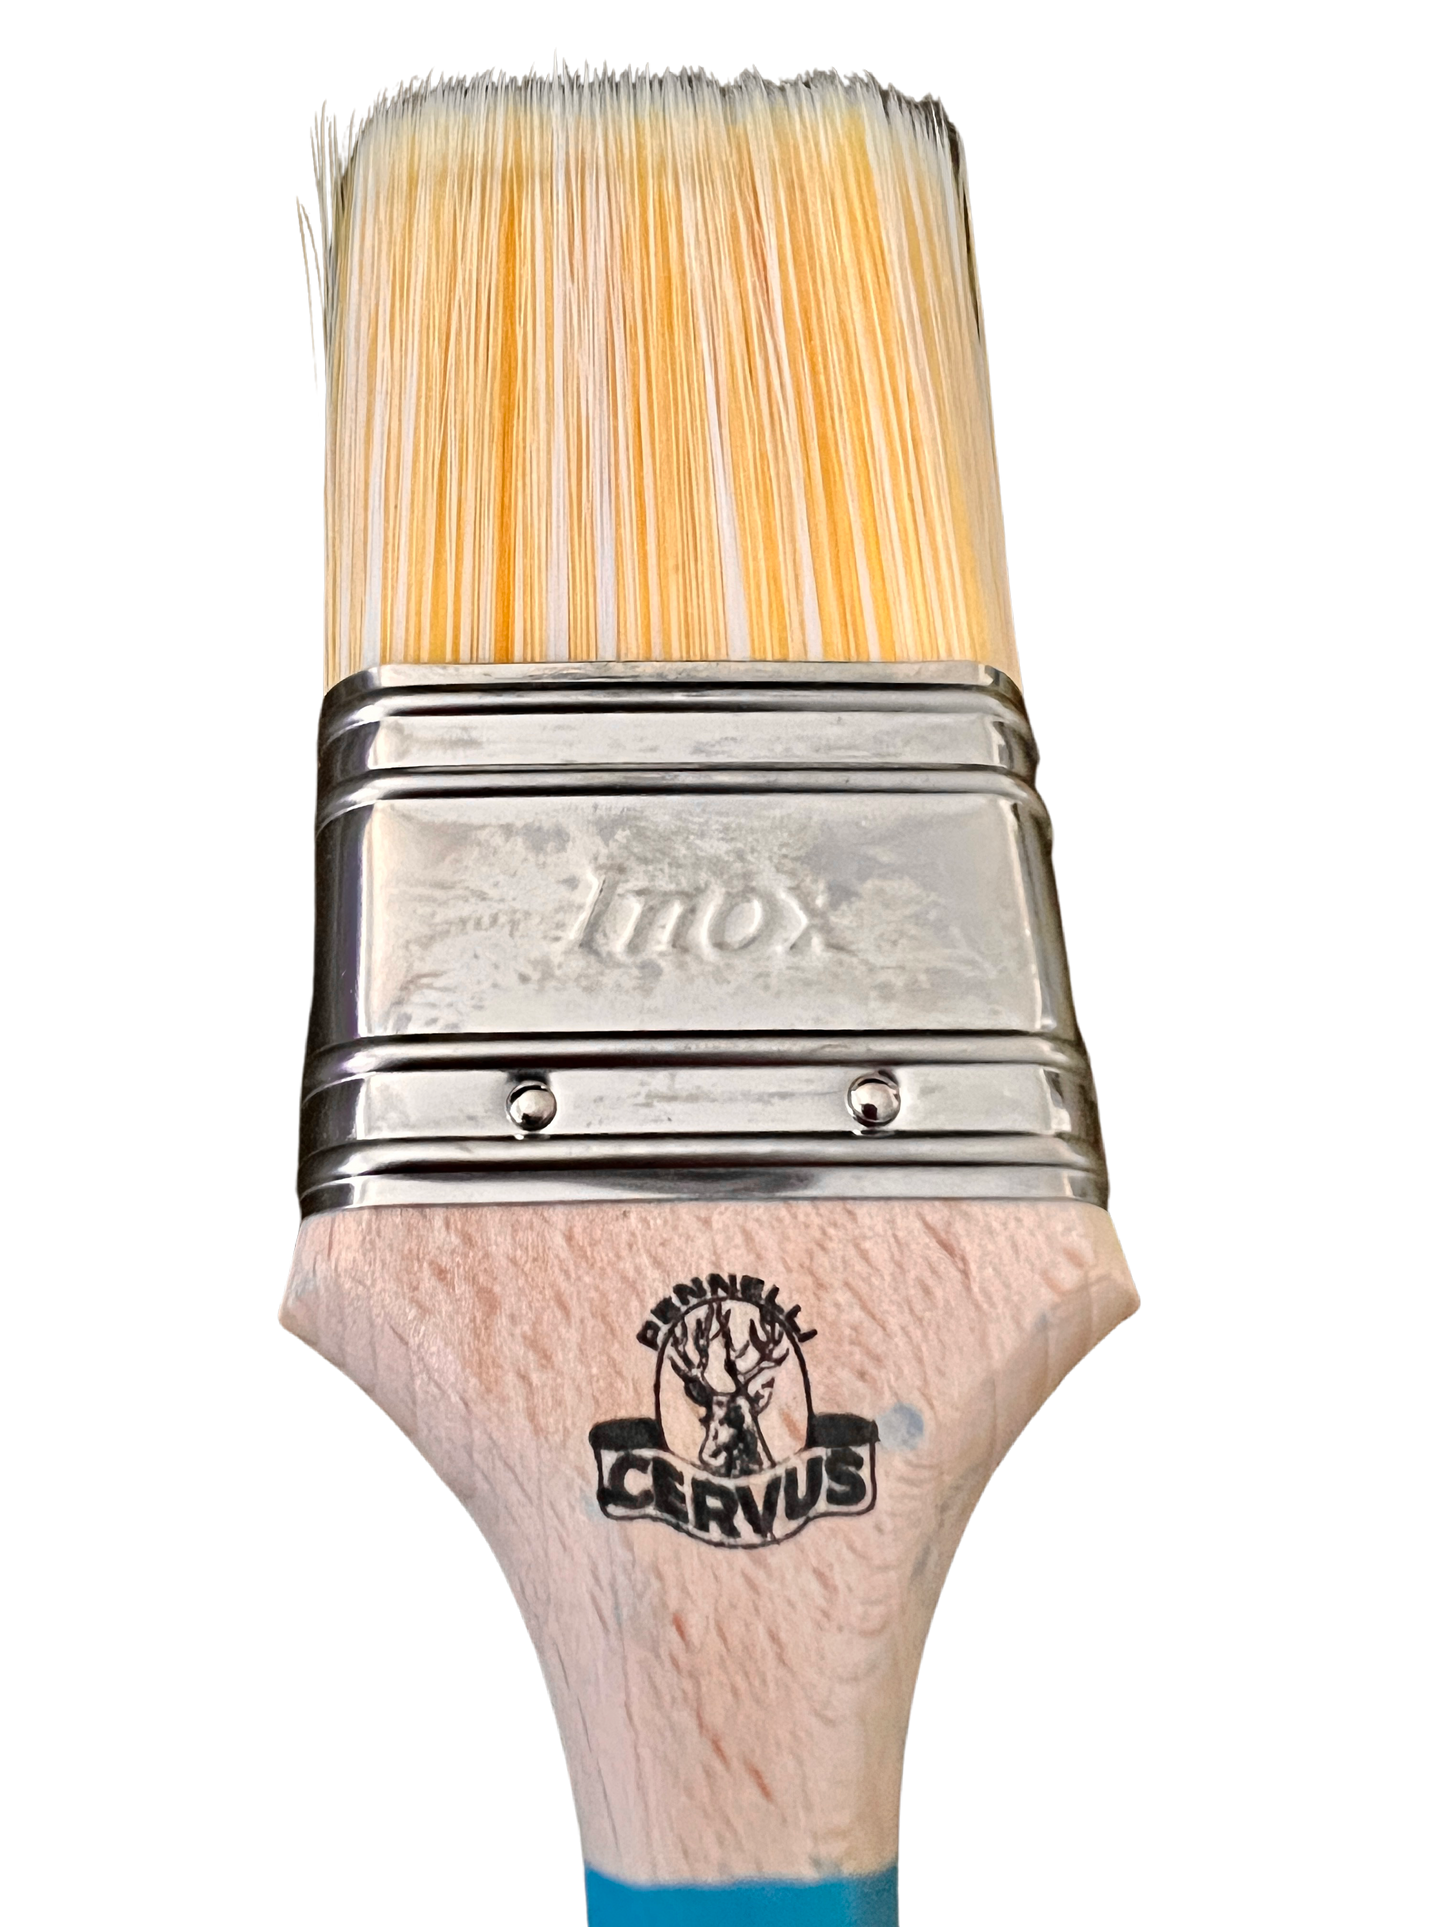 Italian Paint Brush-Soft bristle.